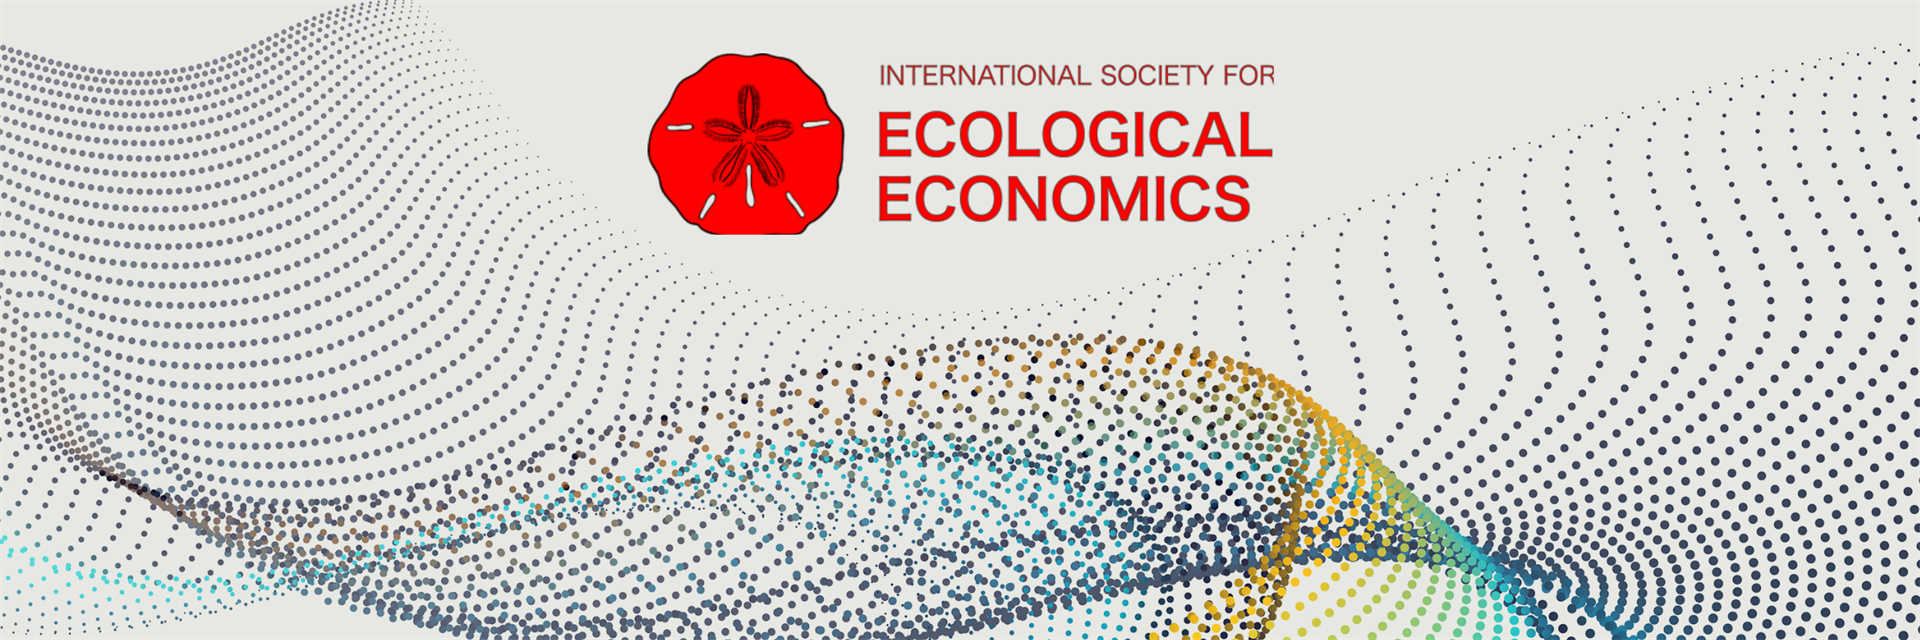 International Society for Ecological Economics